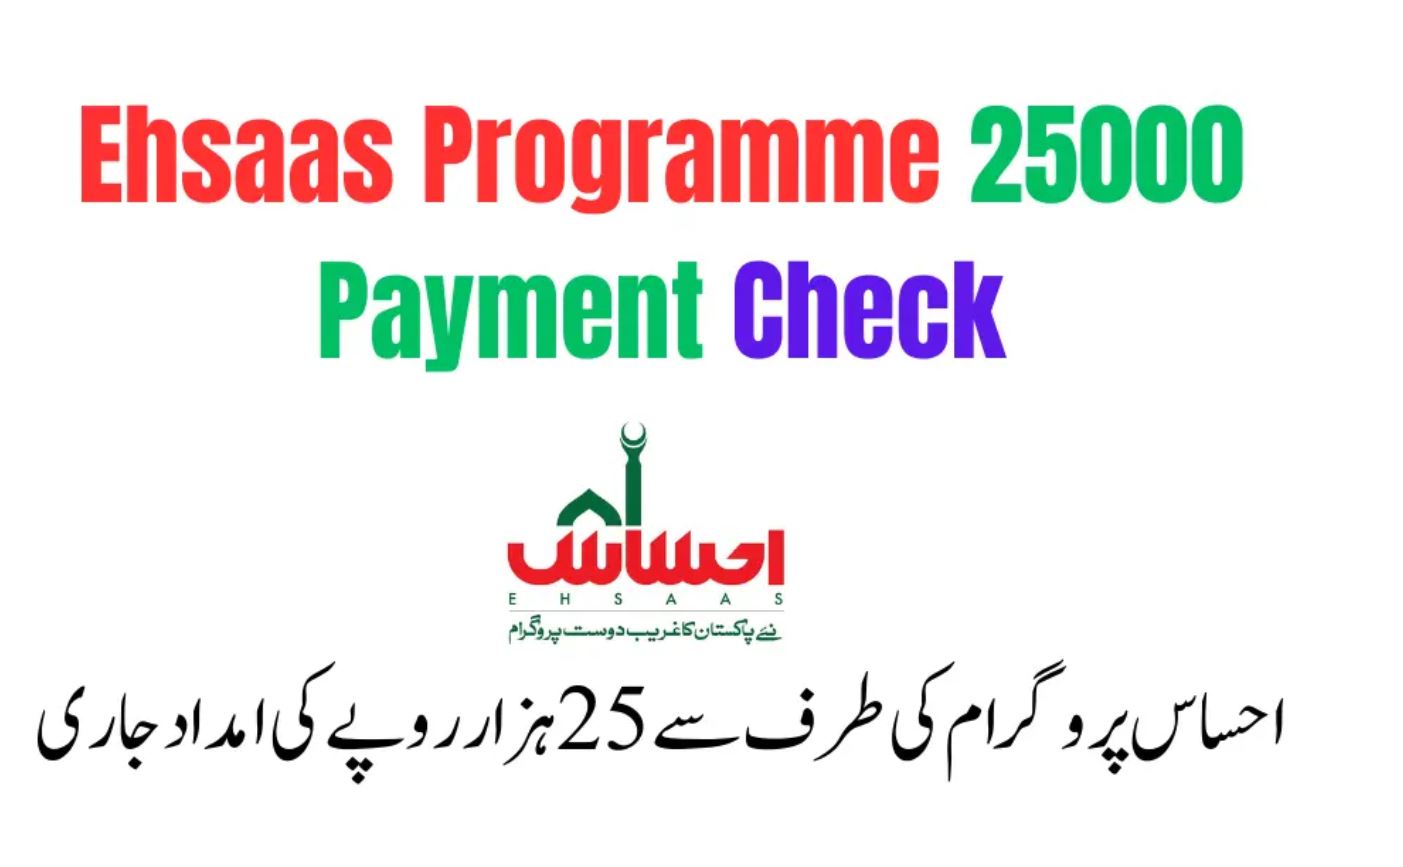 Ehsaas Programme Regarding 25000 Payment Check